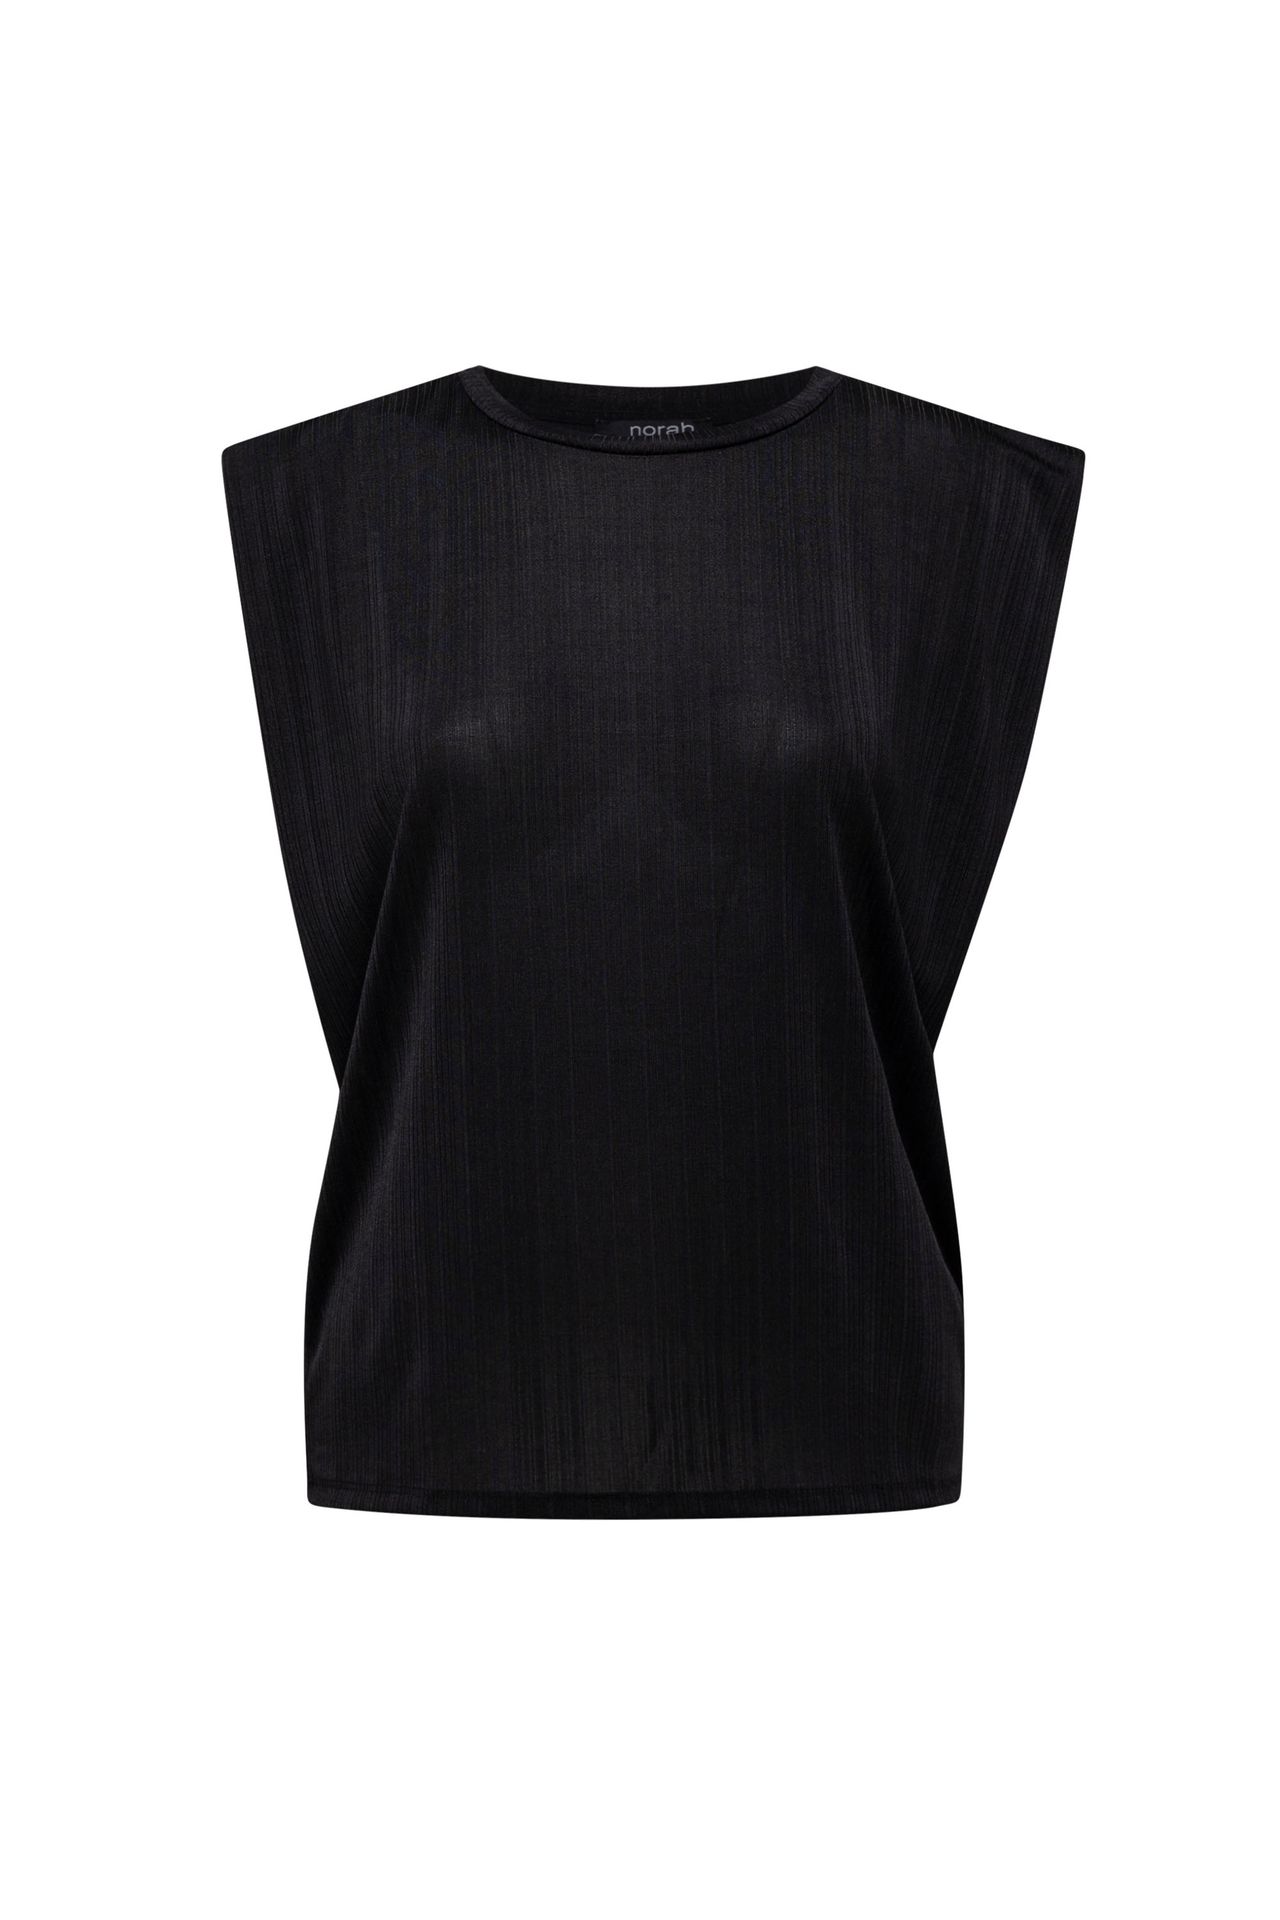 Norah Zwart shirt mouwloos black 213826-001